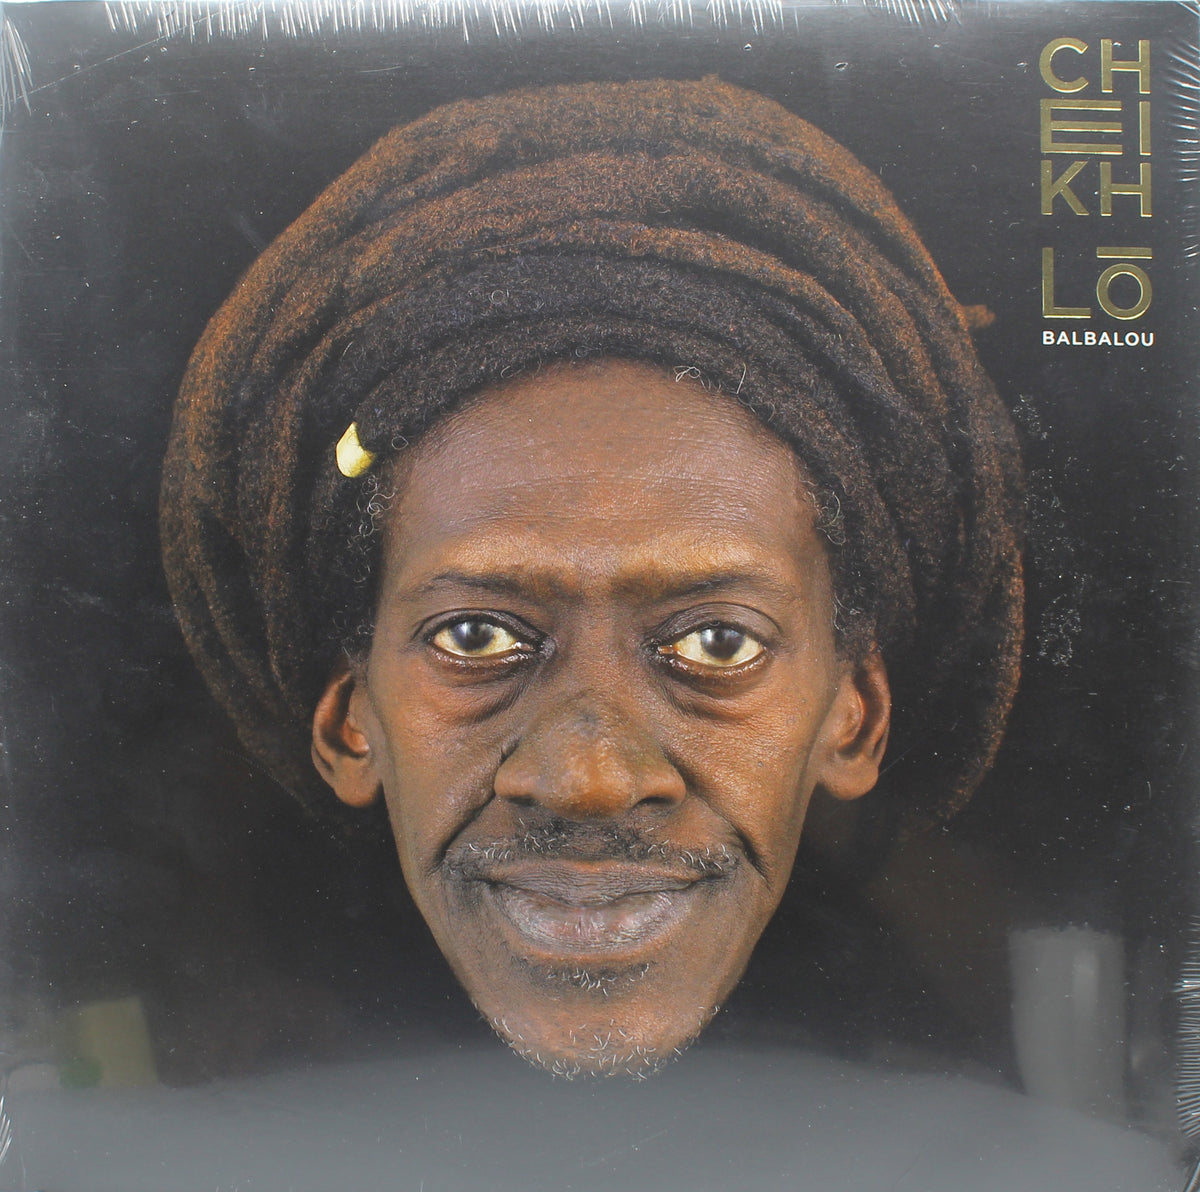 Cheikh Lô – Balbalou, Vinyl LP, France 2015 (Various diff)